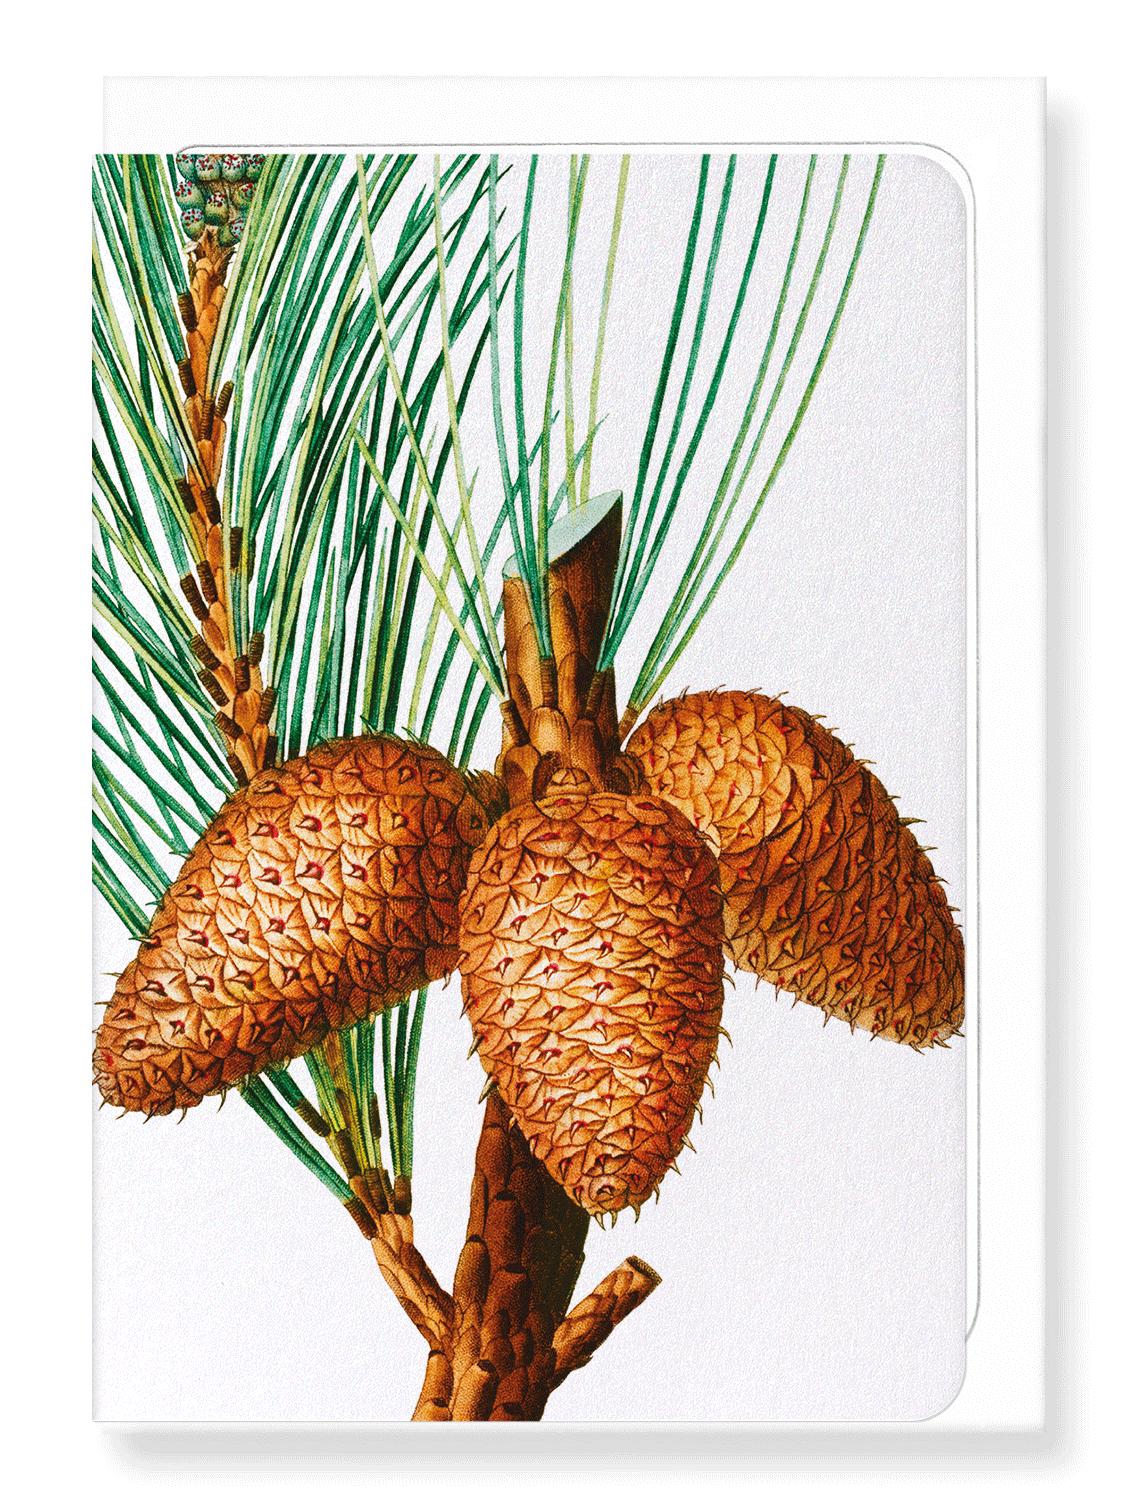 Ezen Designs - Pitch pine (detail) - Greeting Card - Front